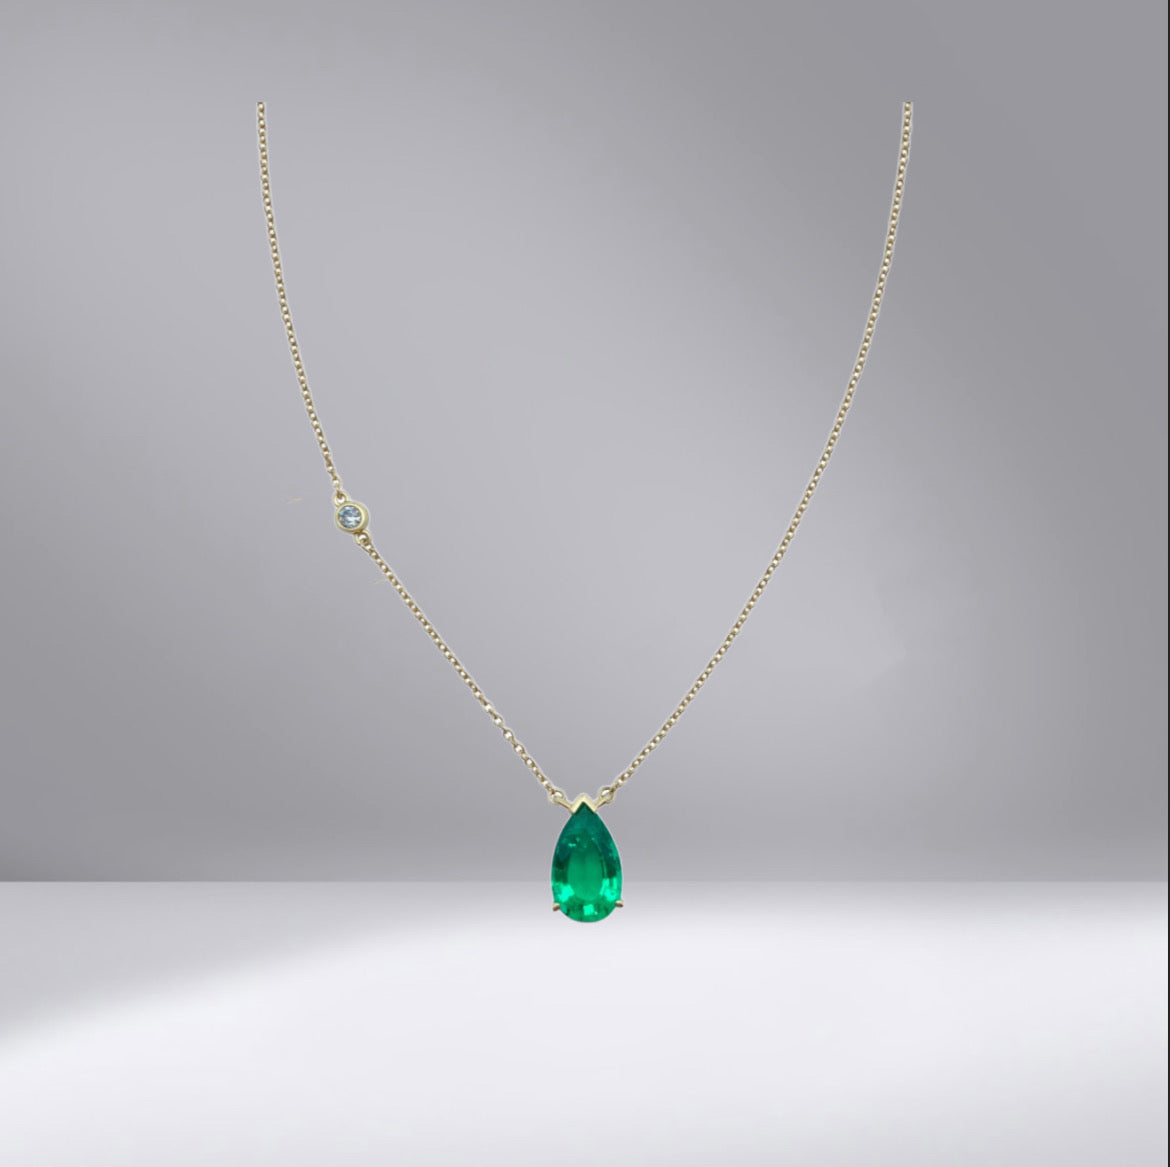 Esmeralda Pink Sapphire Necklace